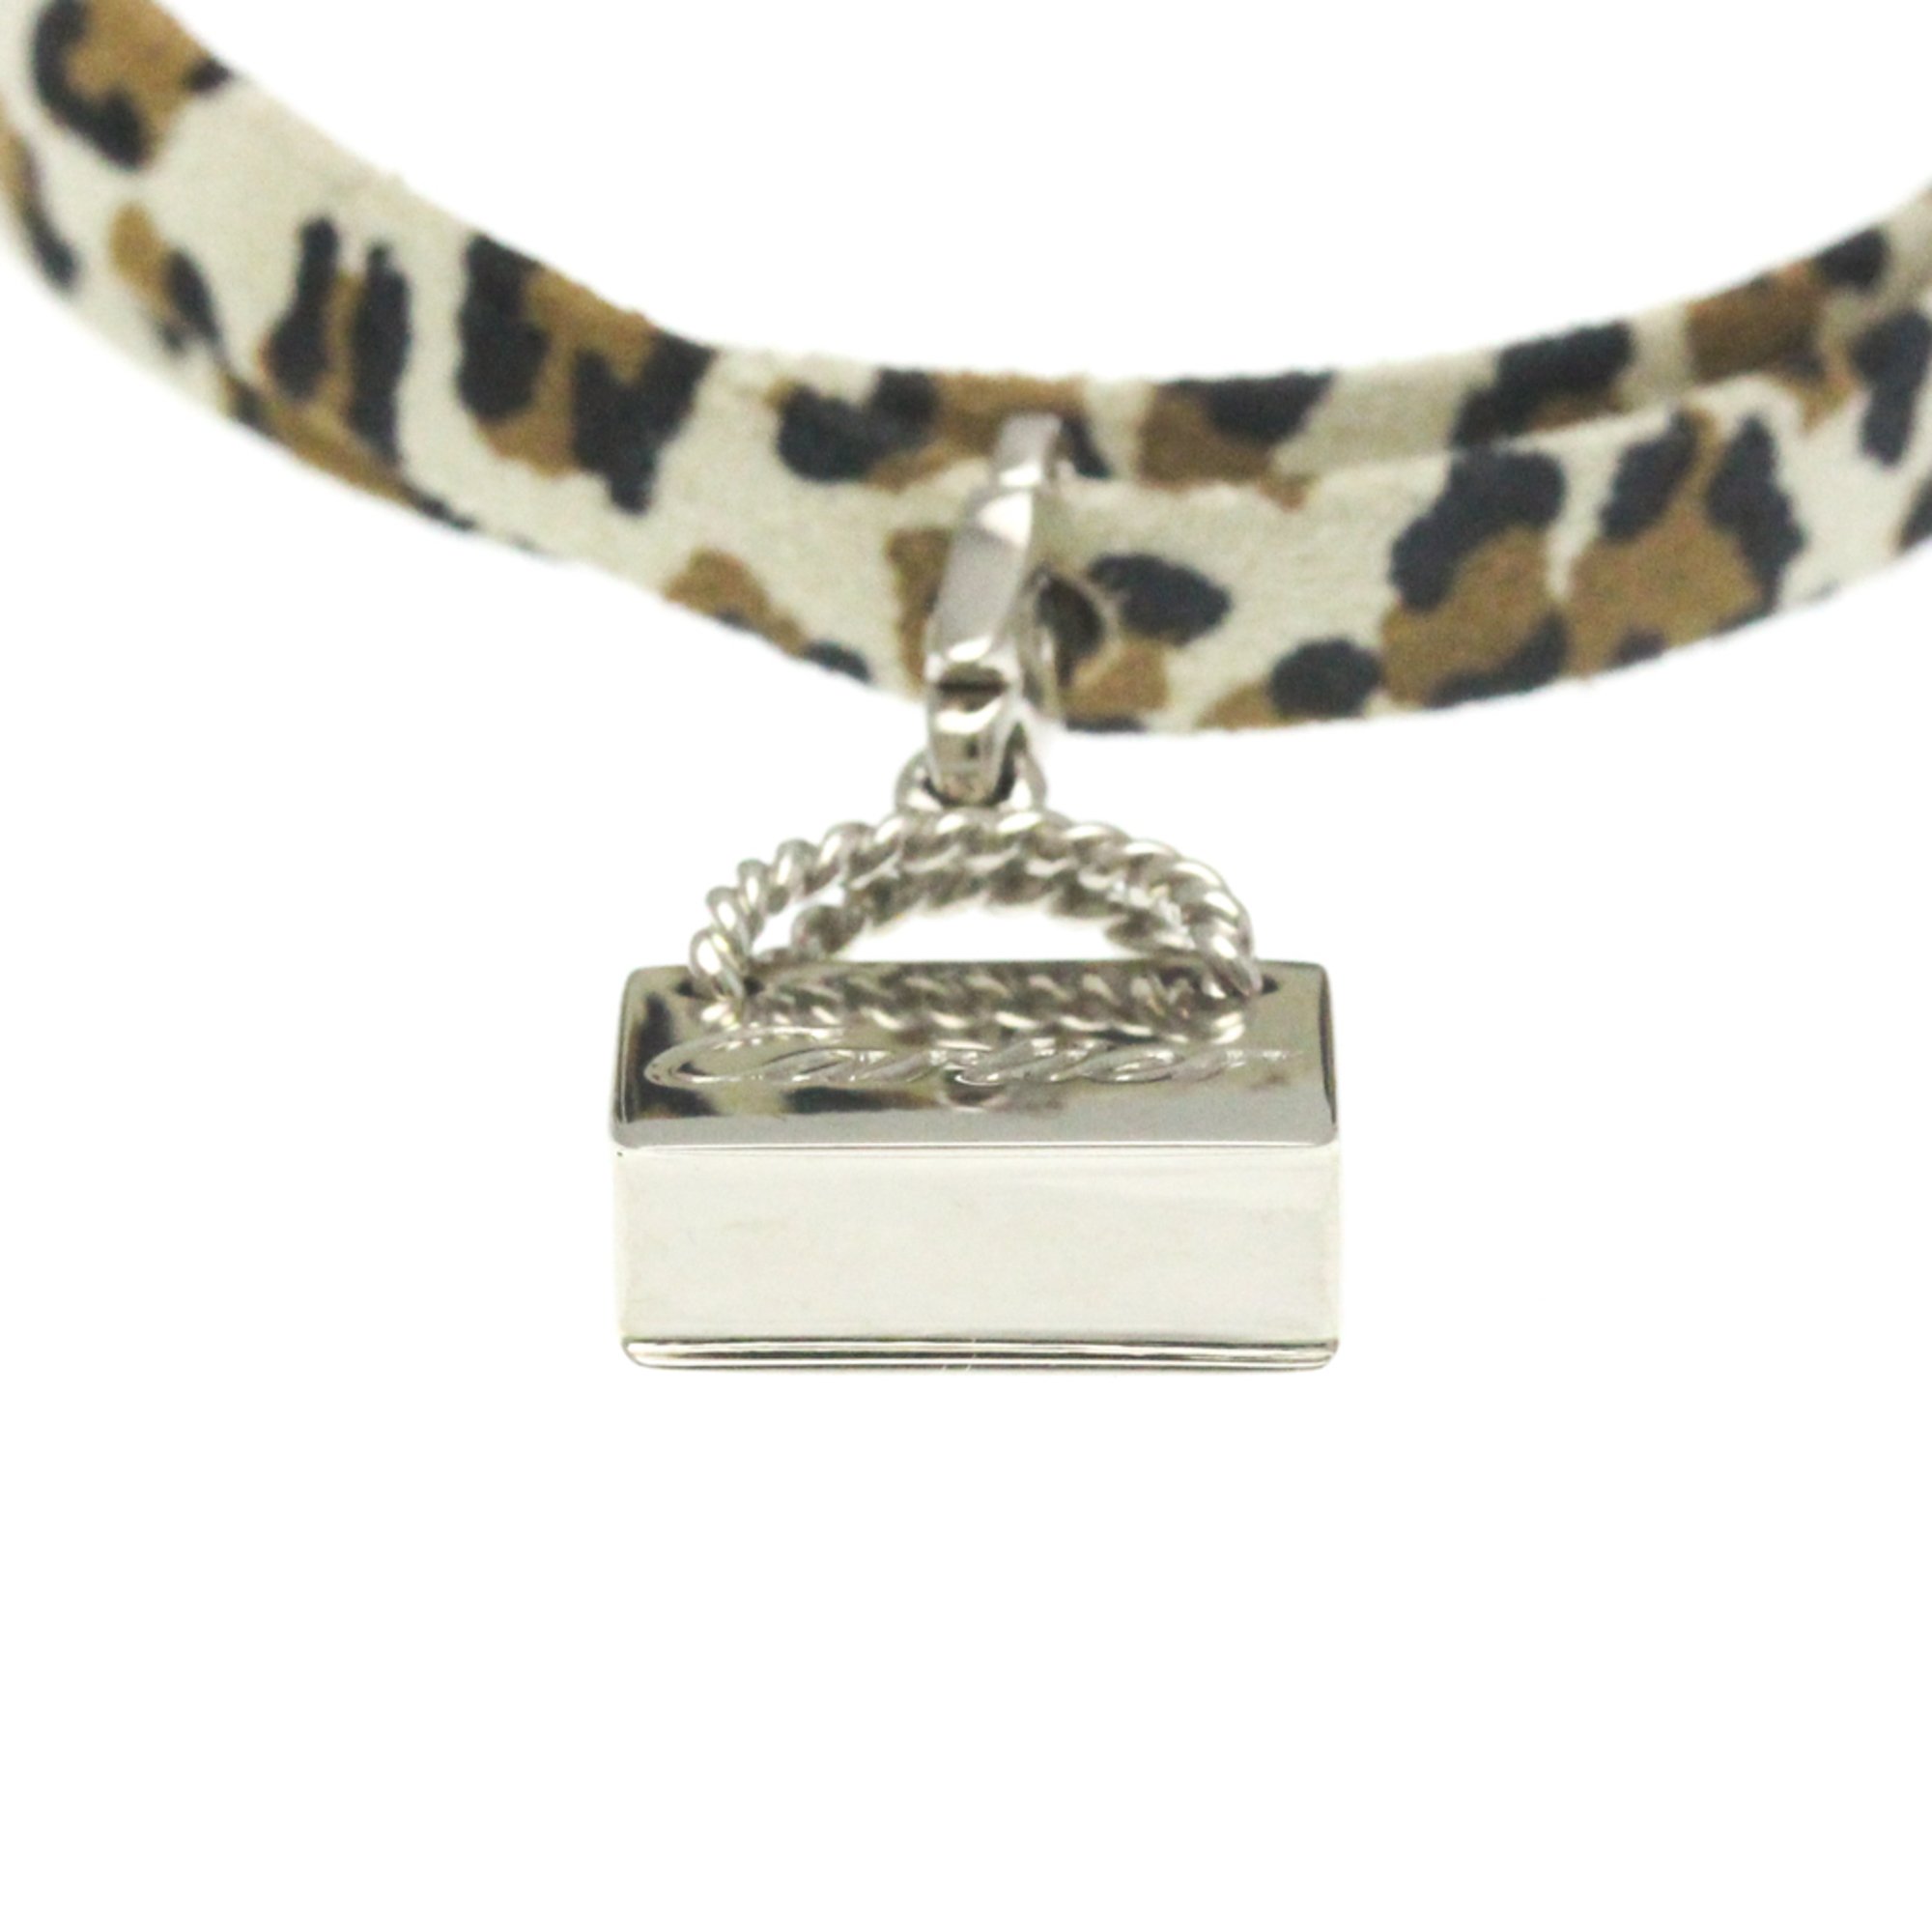 Cartier Shopper Motif Charm Bracelet Leather,White Gold (18K) No Stone Charm Bracelet Silver